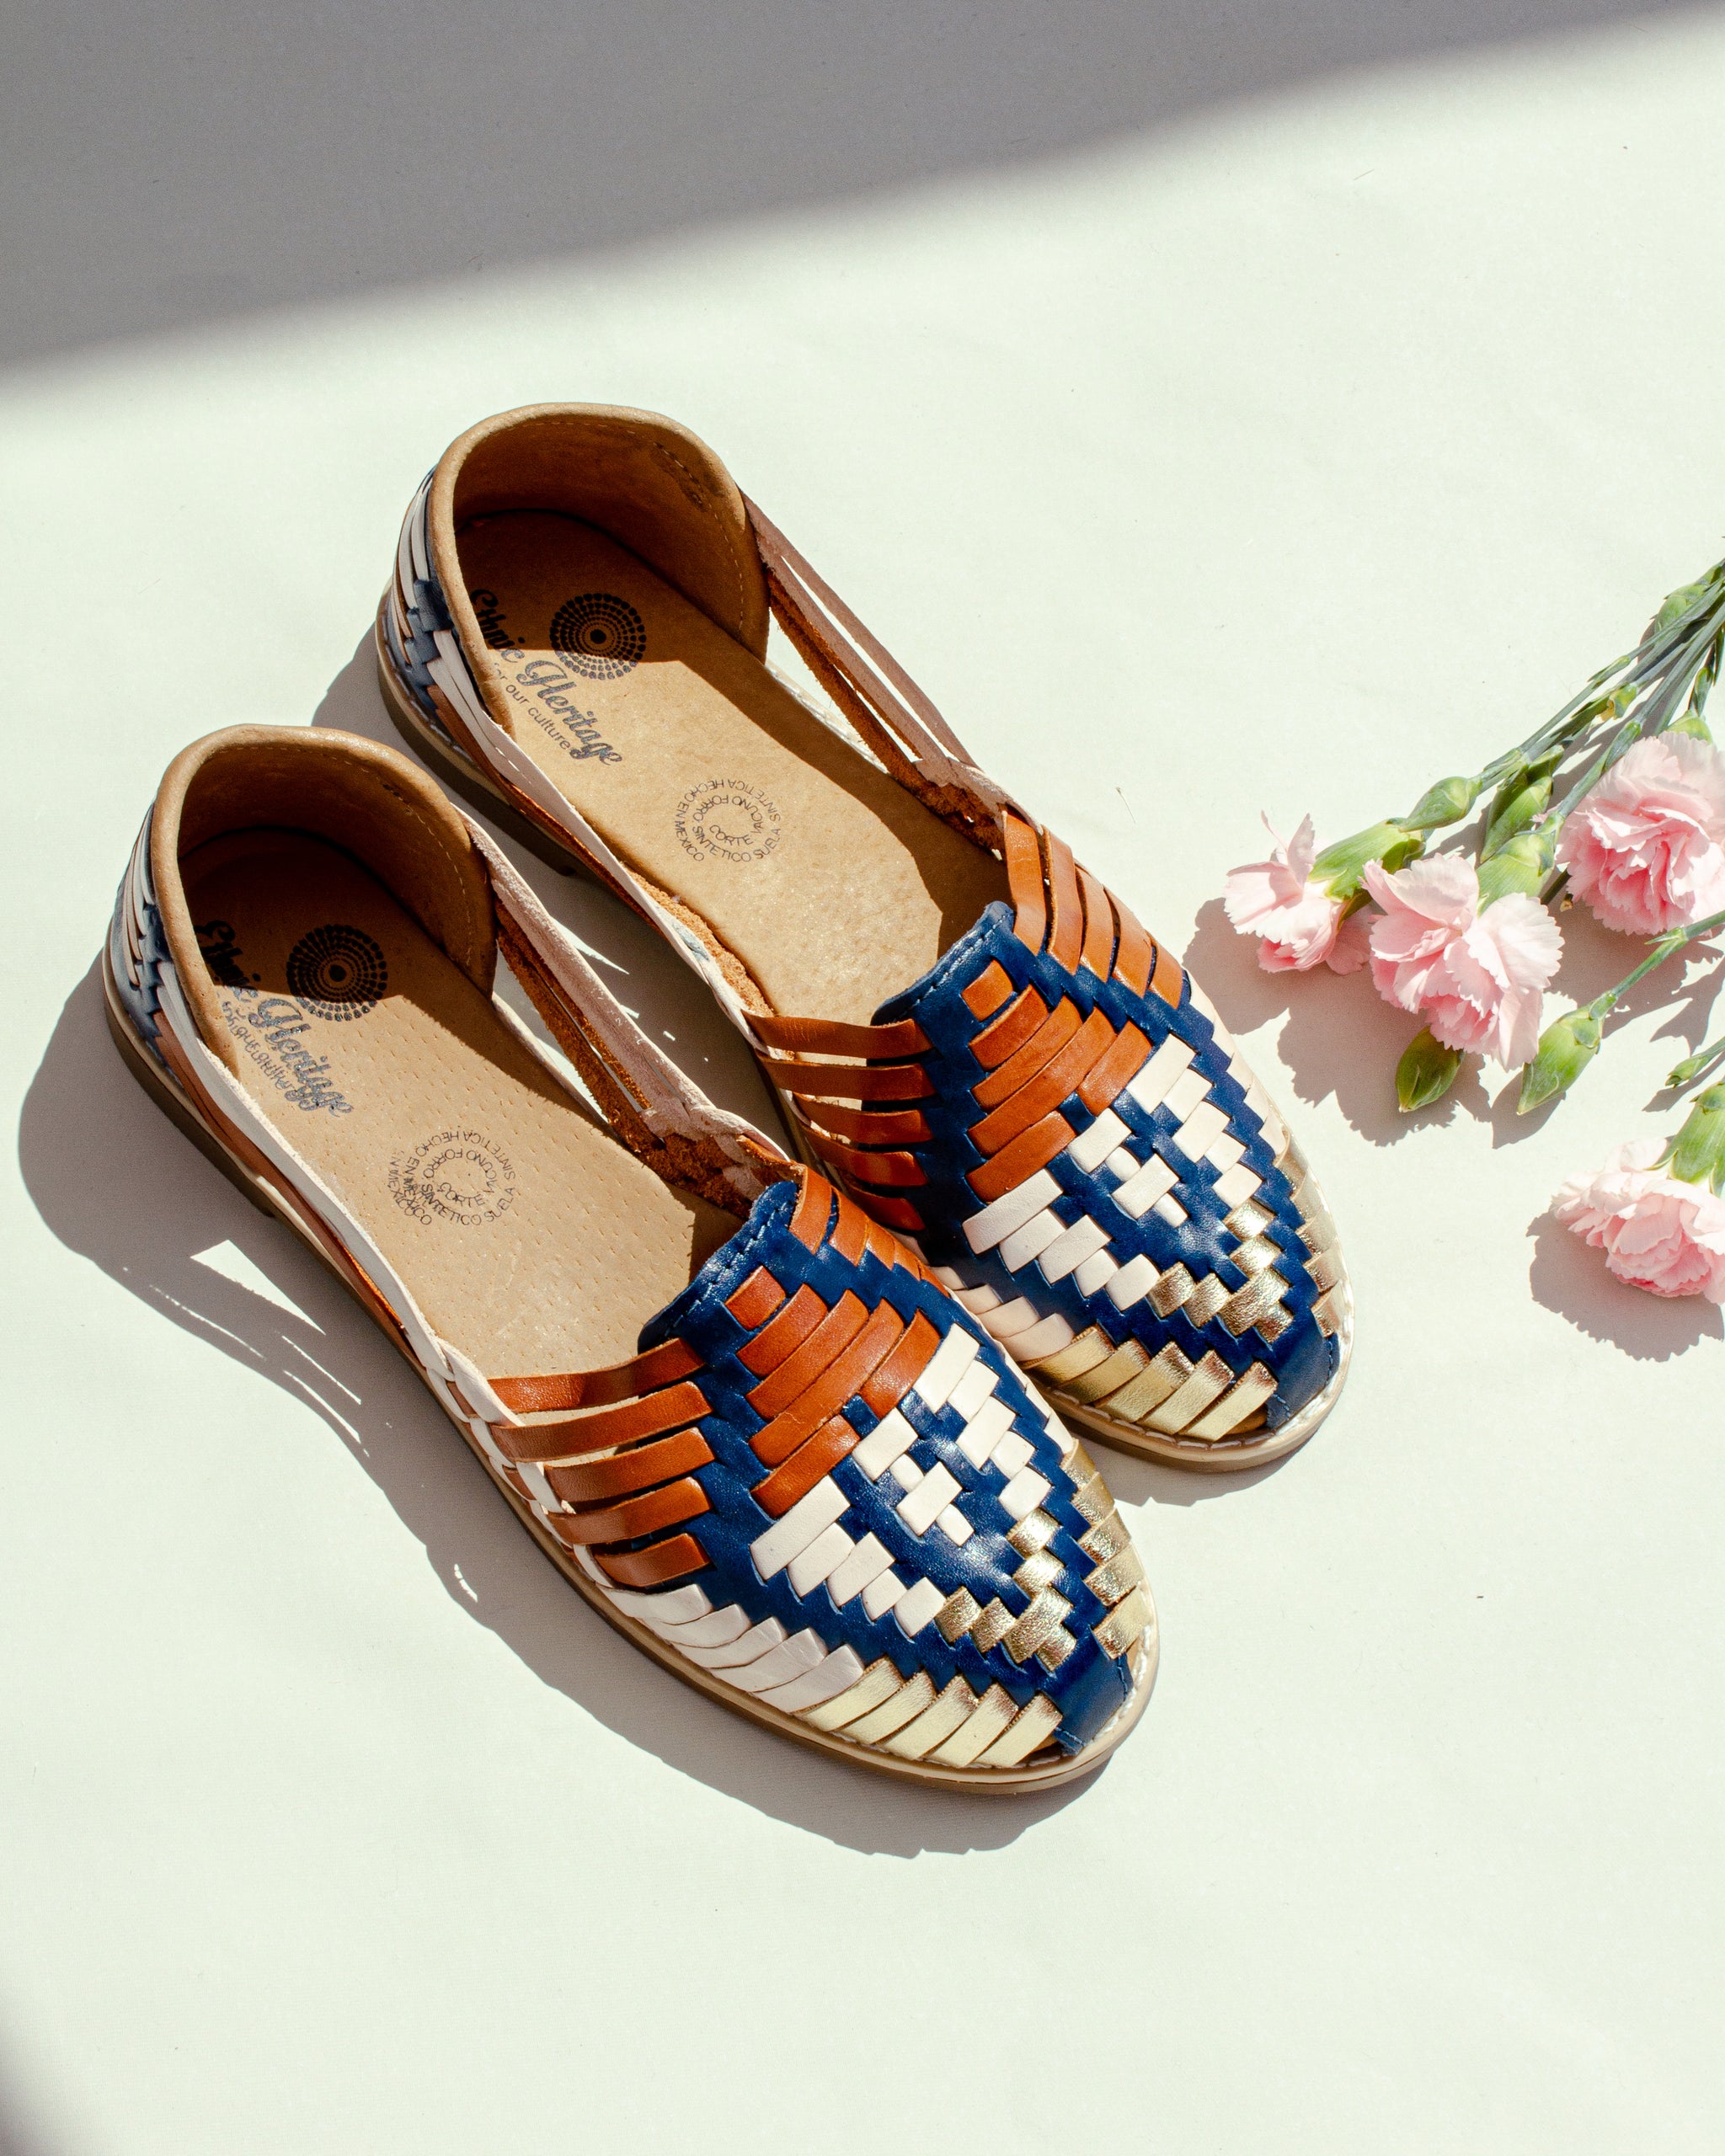 The Artesano Leather Huarache Flat Sandals - Ethnic Heritage